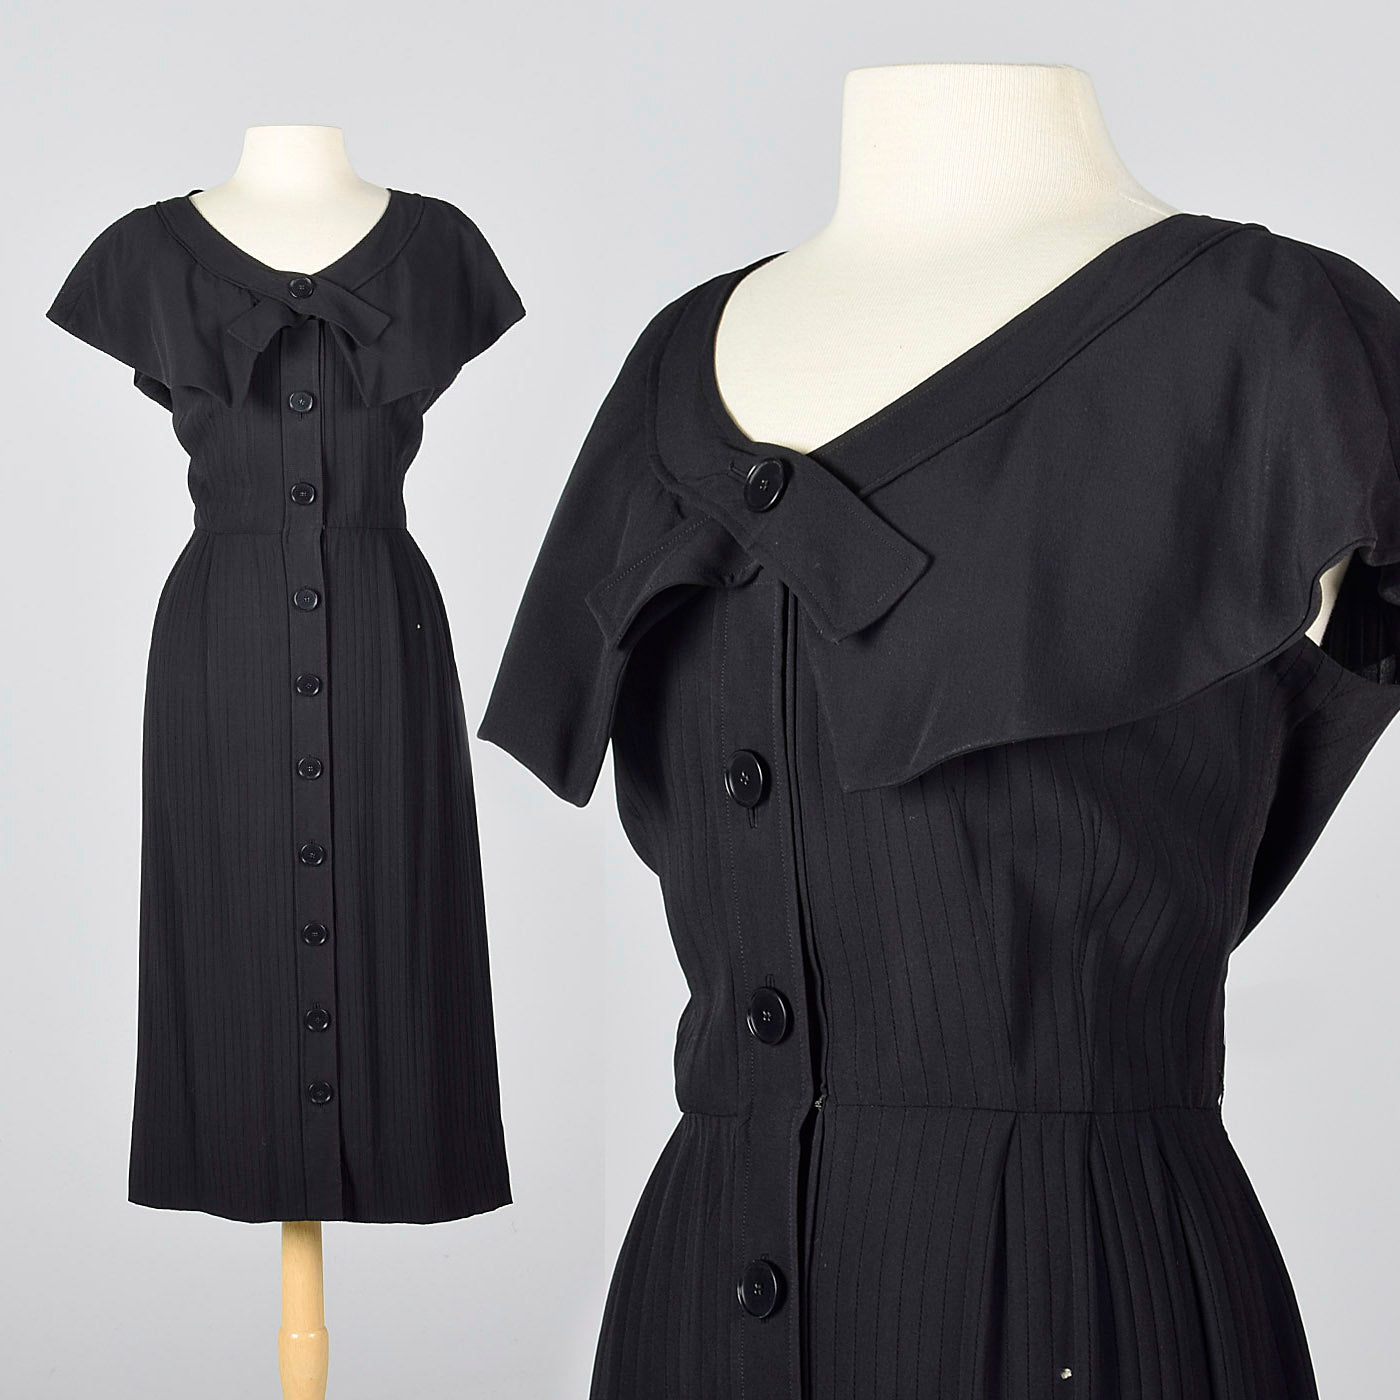 1950s Little Black Dress from Marshall Fields 28 Shop